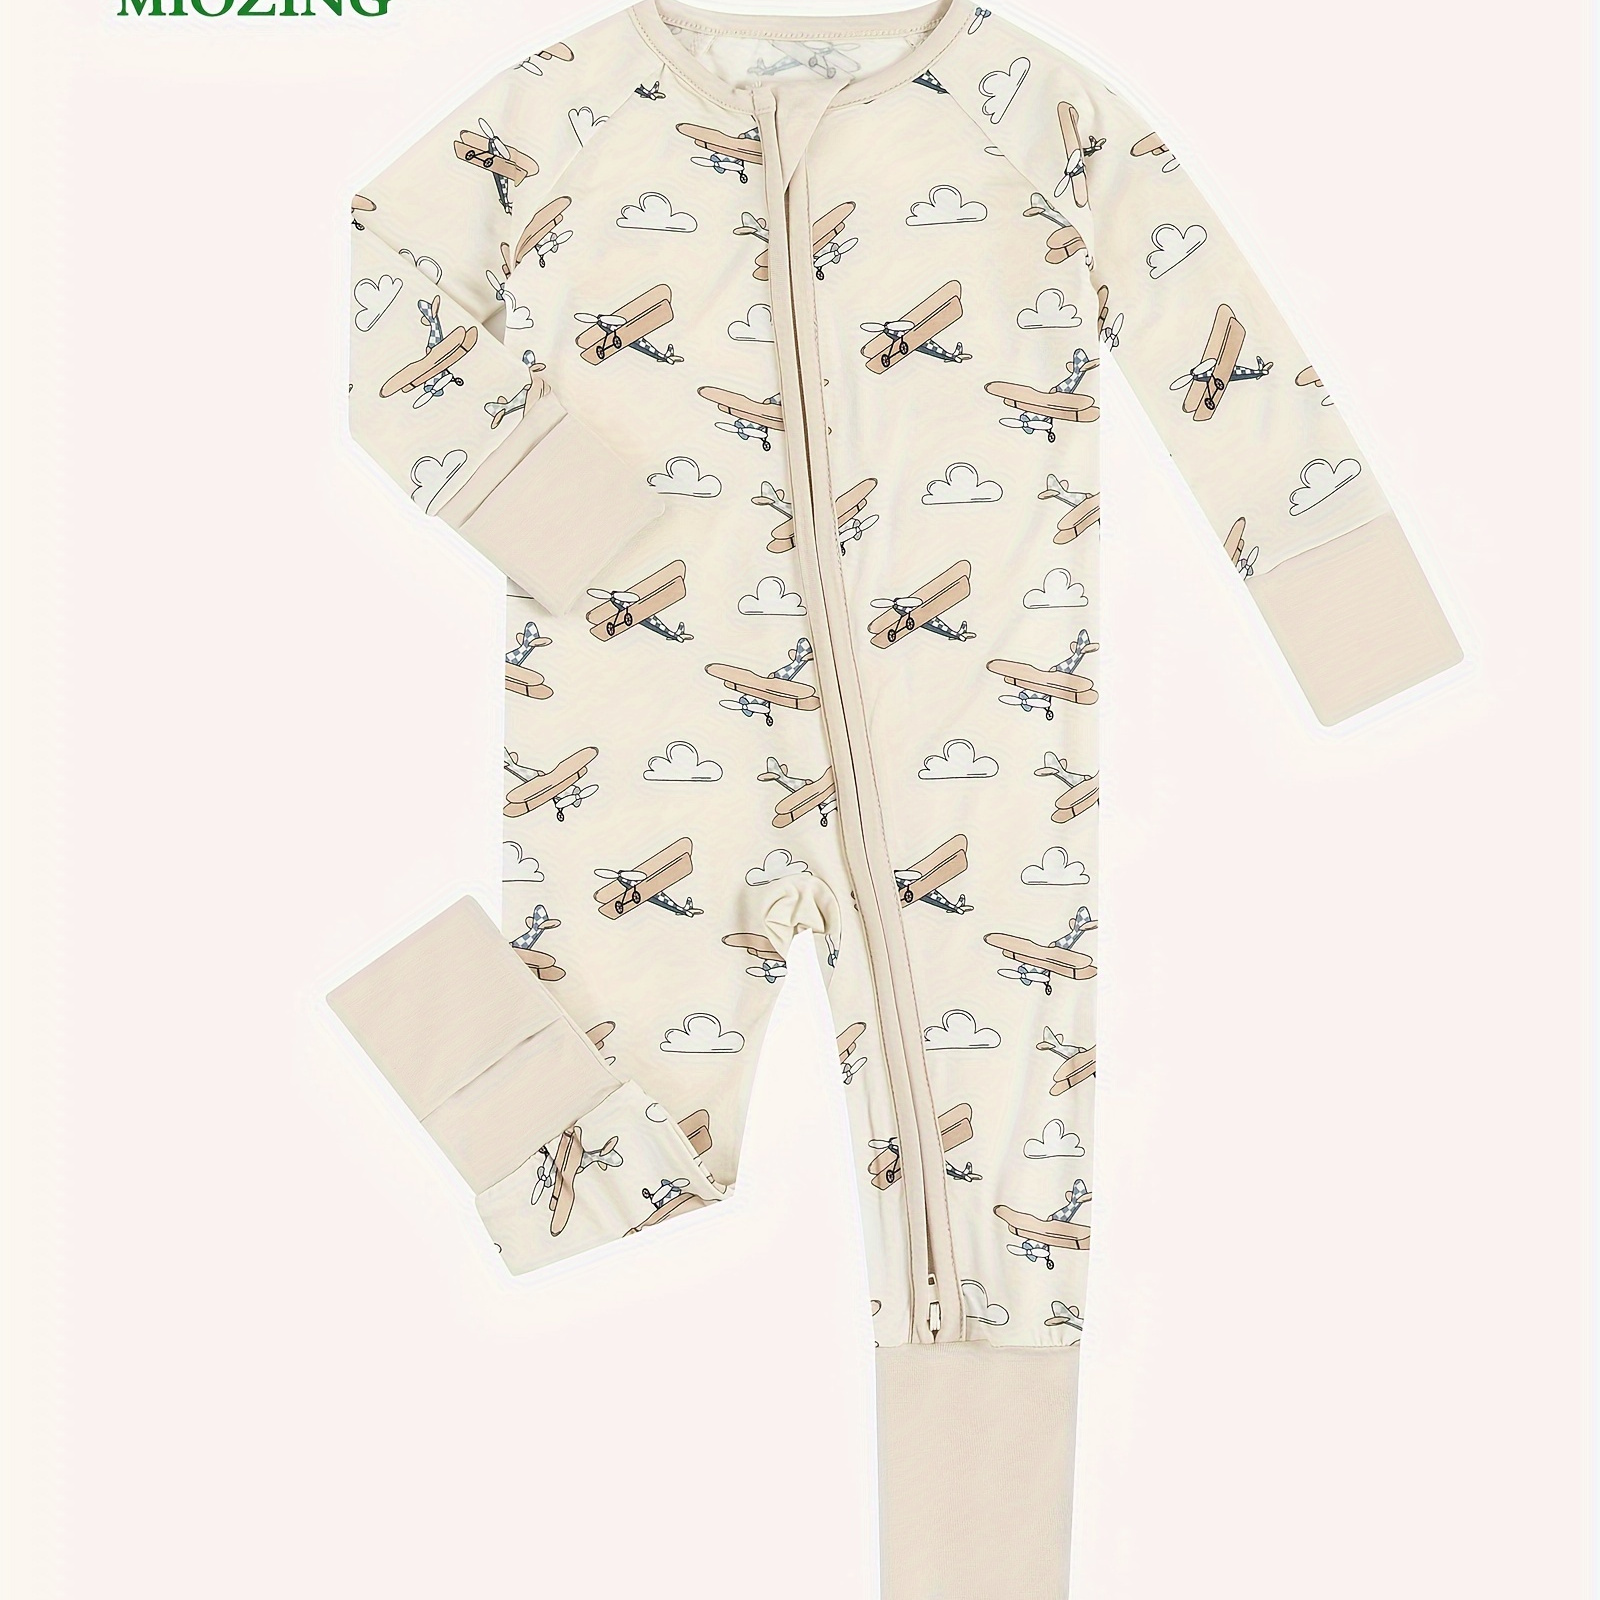 

Miozing Bamboo Fiber Bodysuit For Infants, Retro Style Plane Pattern Long Sleeve Onesie, Baby Girl's Clothing